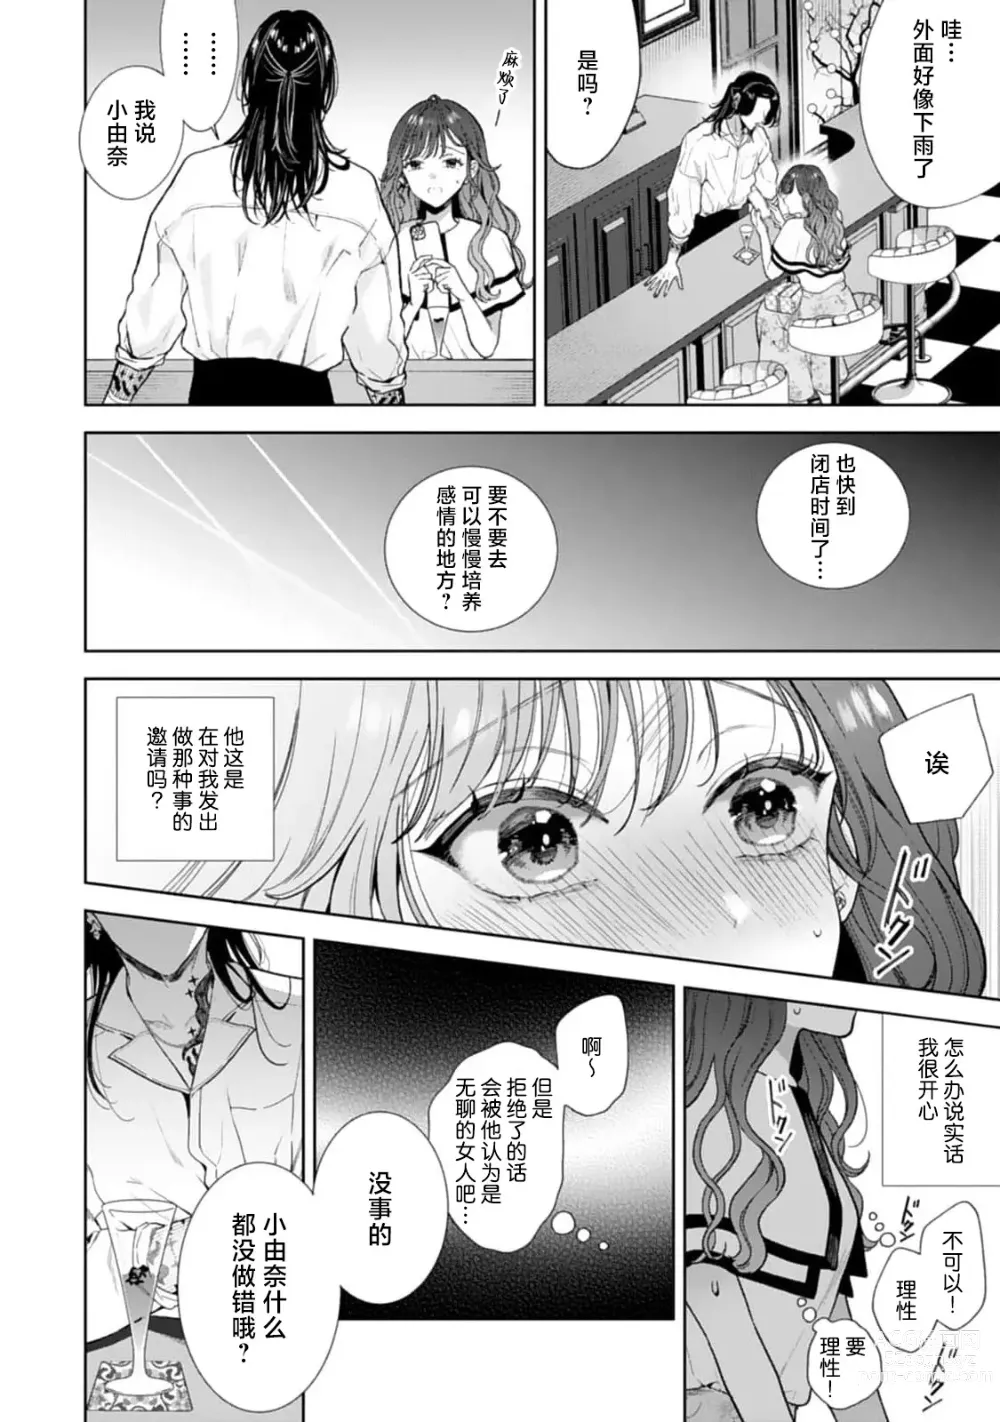 Page 5 of manga 执爱螺旋线